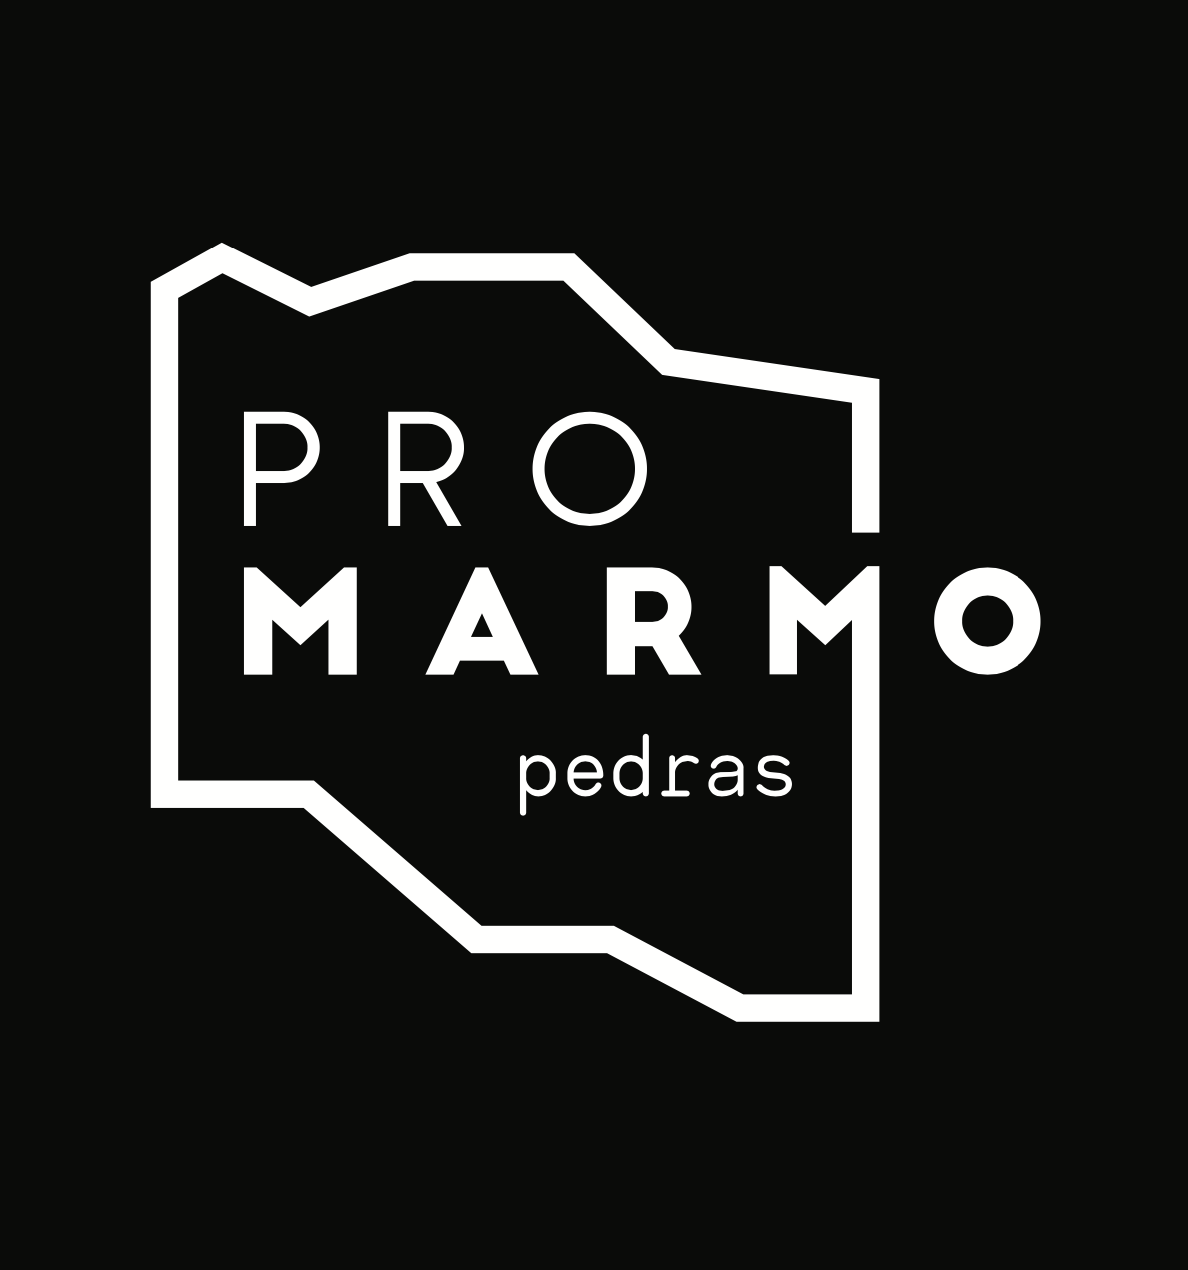 Pro Marmo